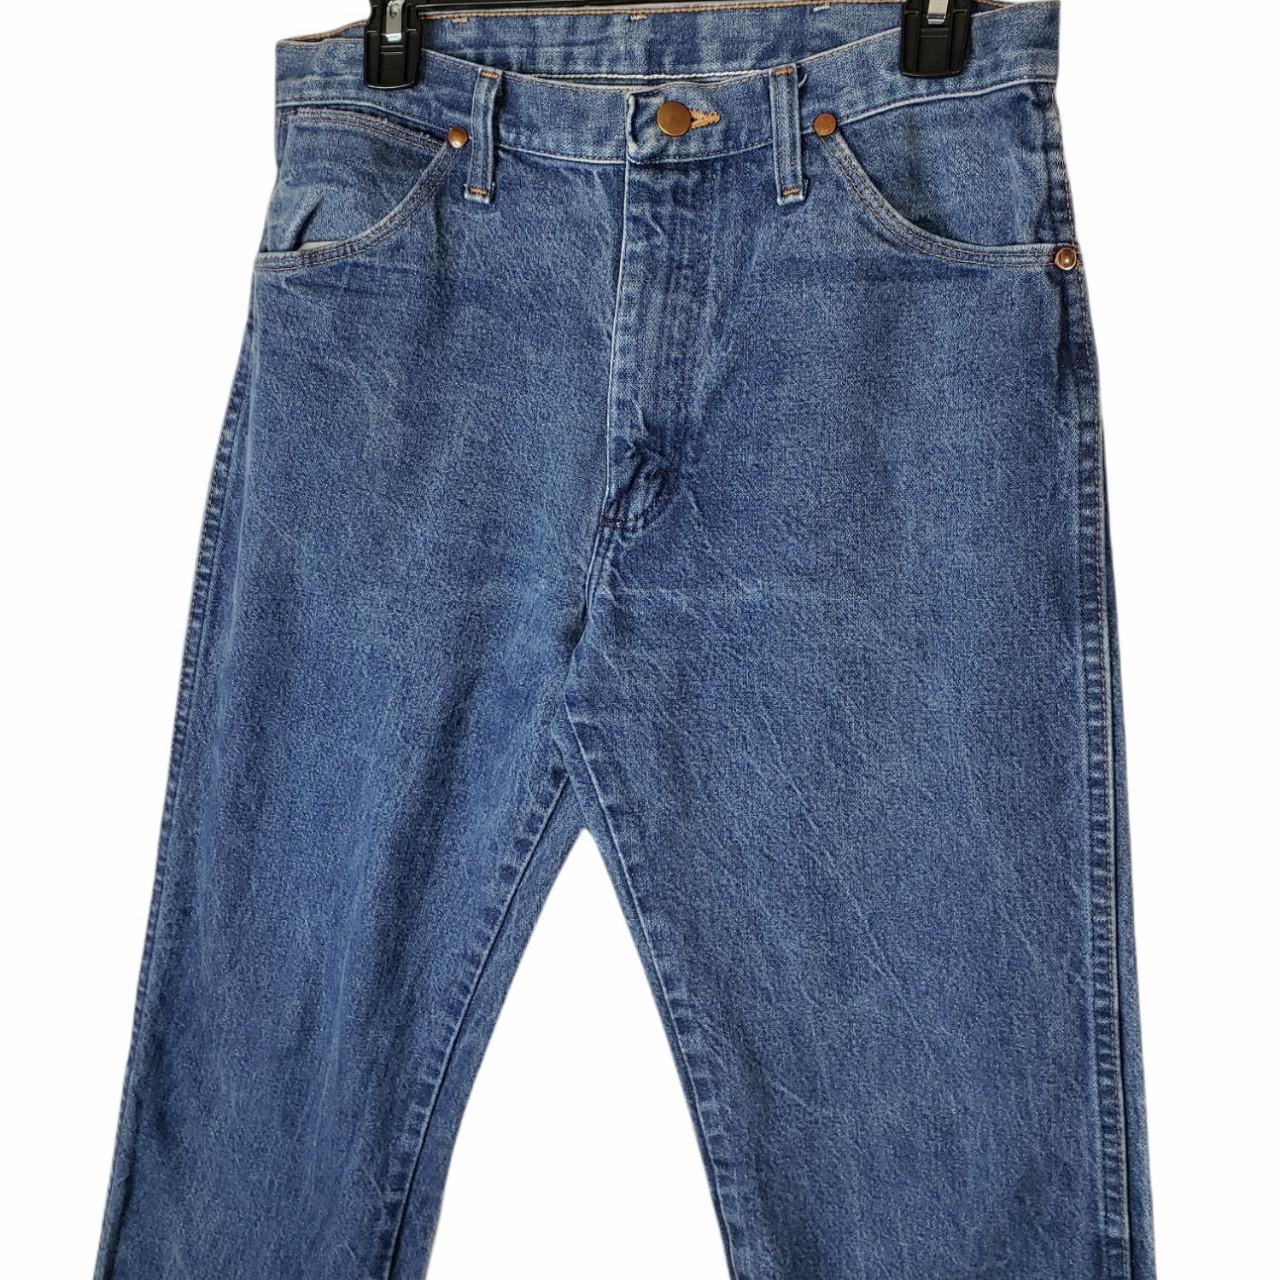 Wrangler Jeans Made in USA In excellent... - Depop